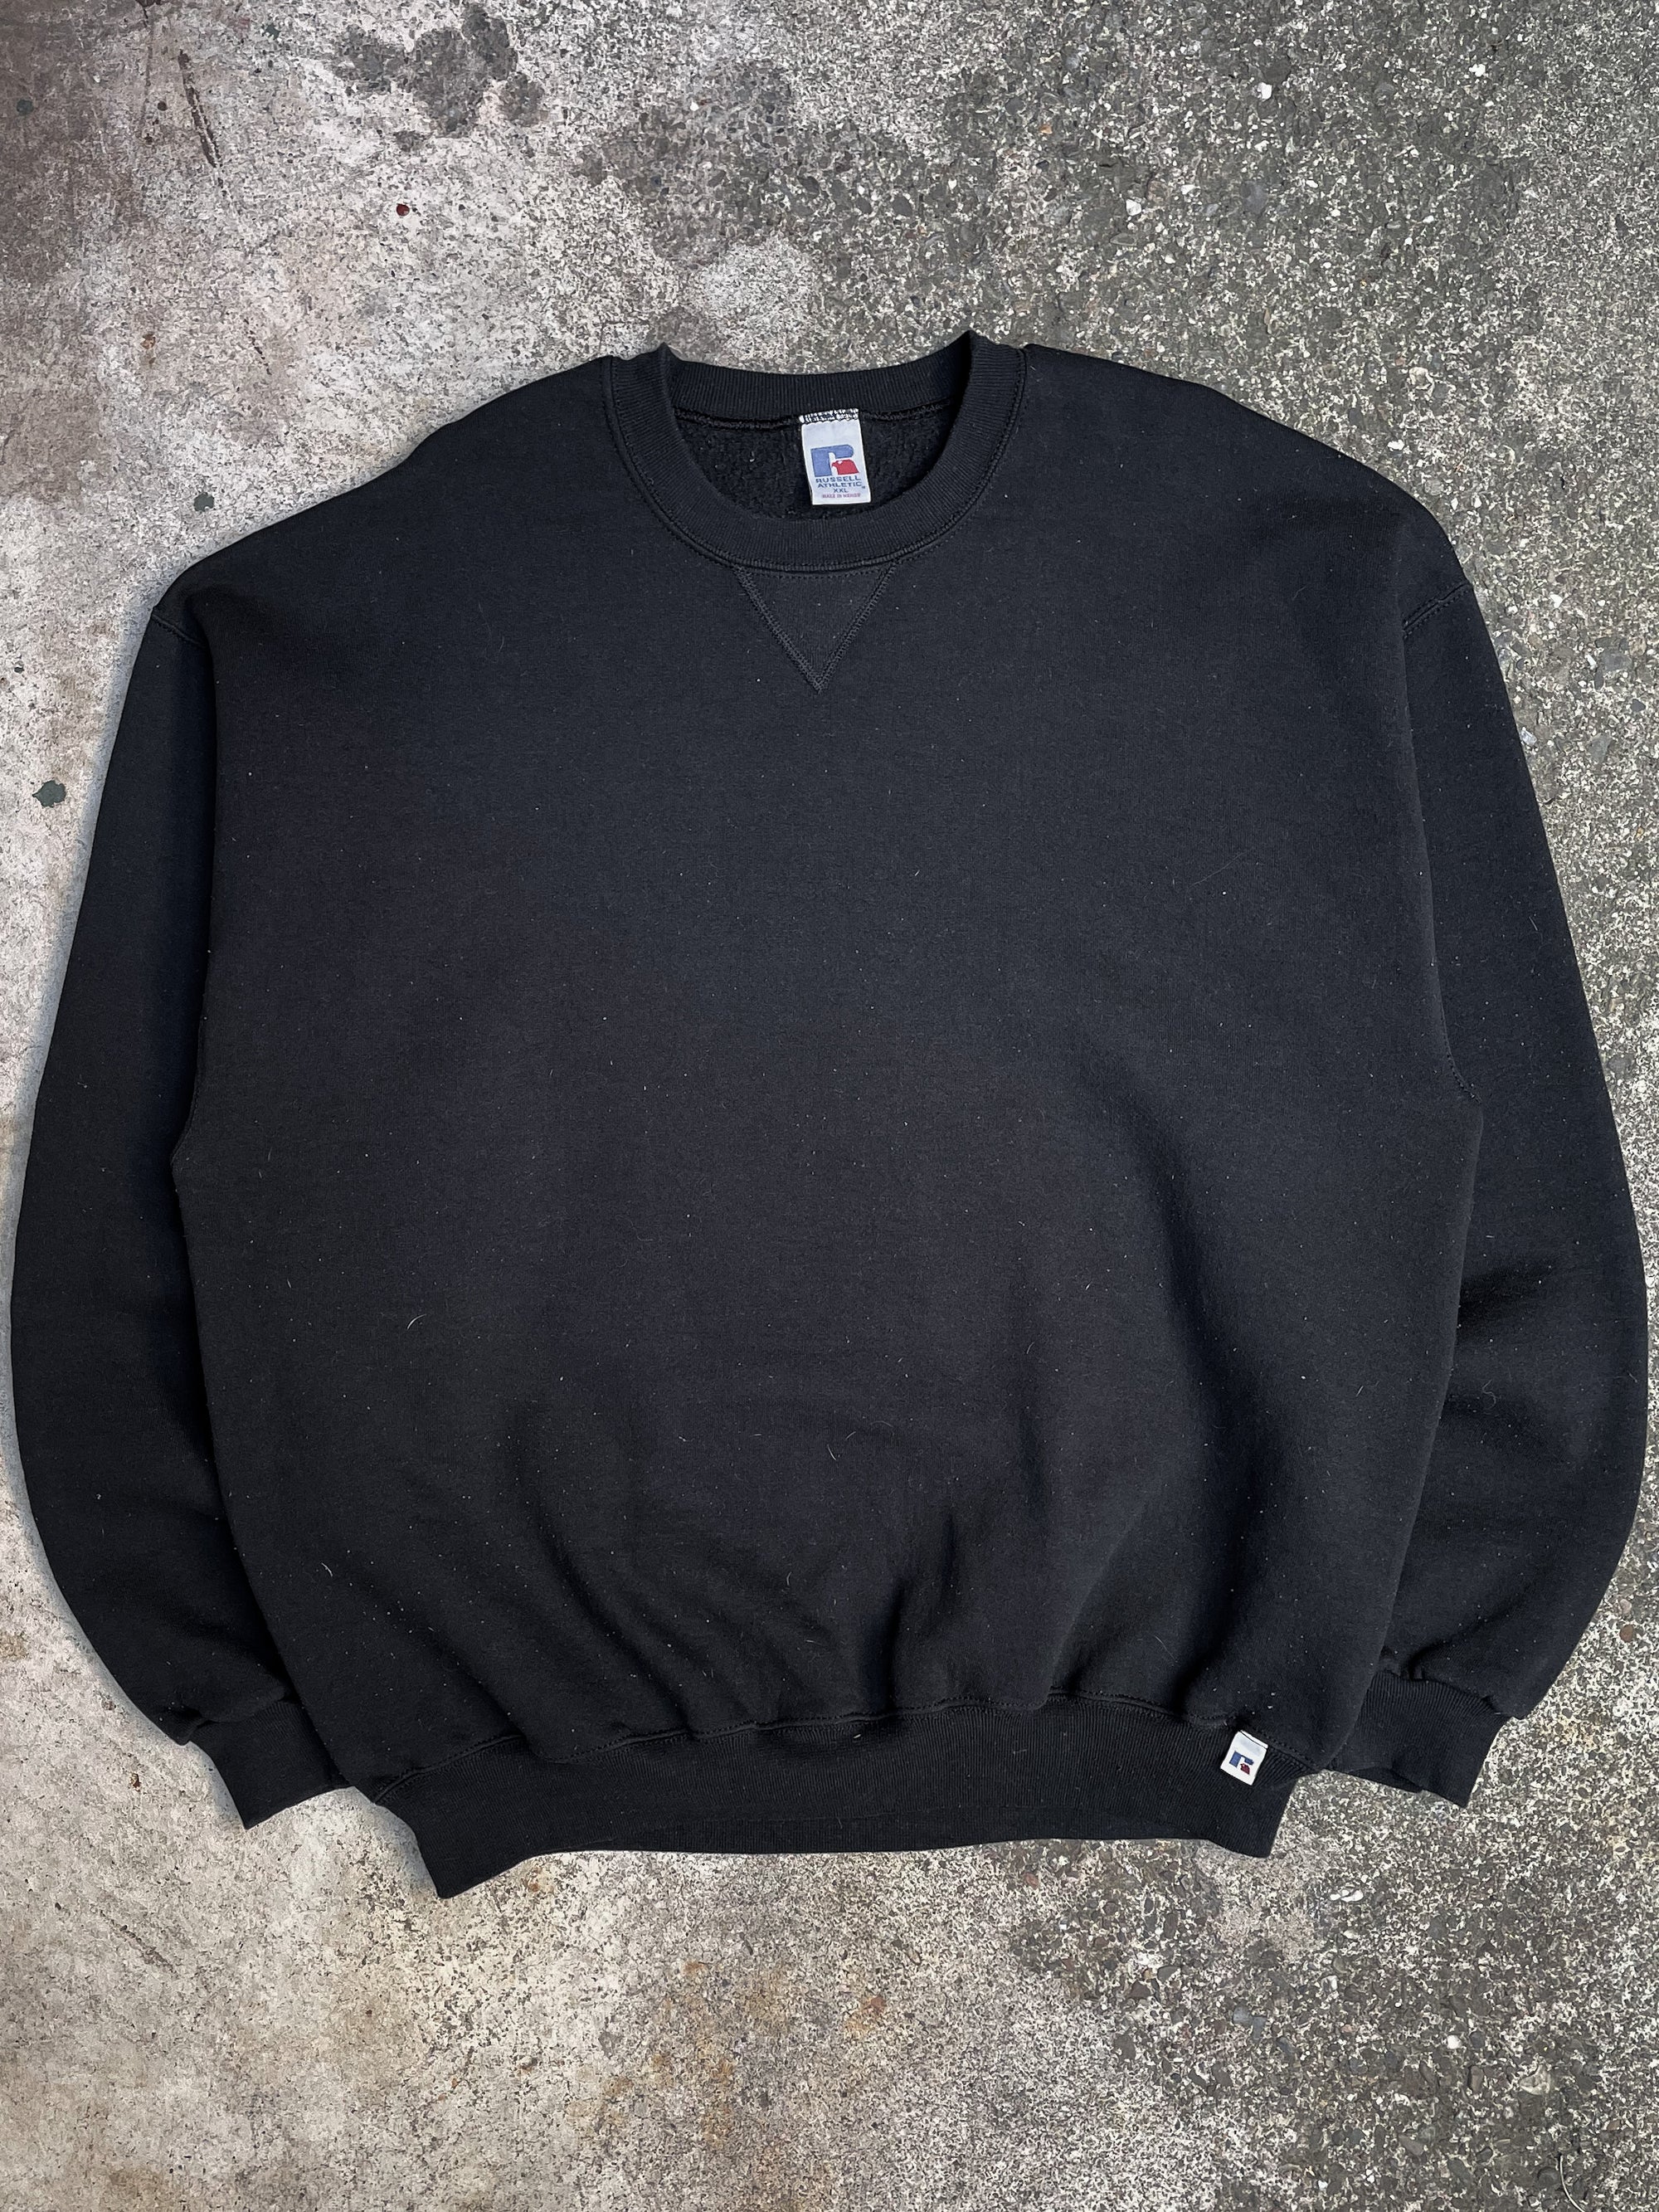 Vintage Russell Black Sweatshirt (XXL)